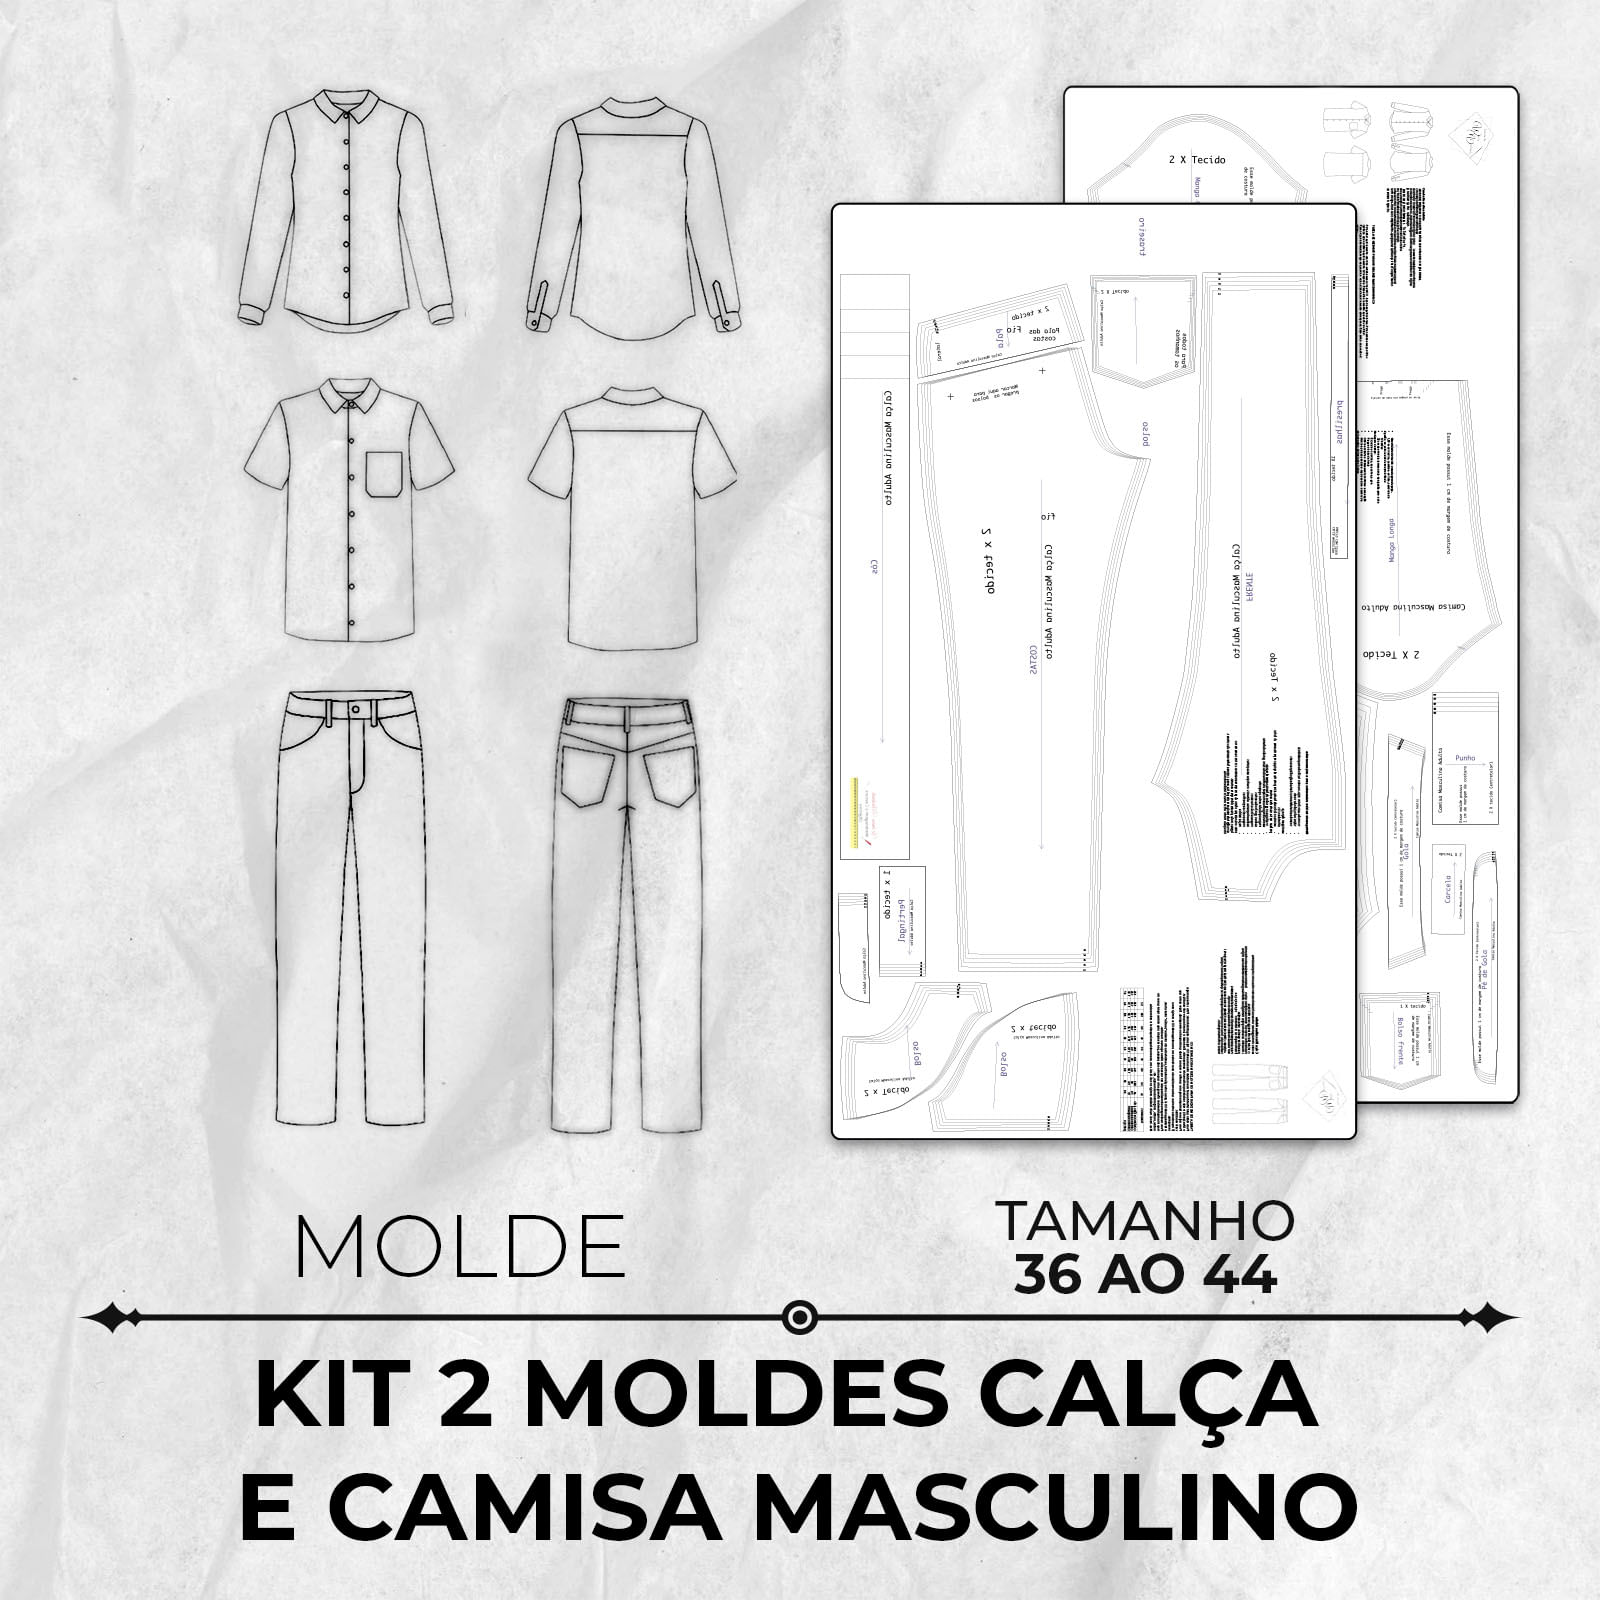 Kit 2 moldes calça e camisa masculino tamanho 36 ao 44 by Wania Machado